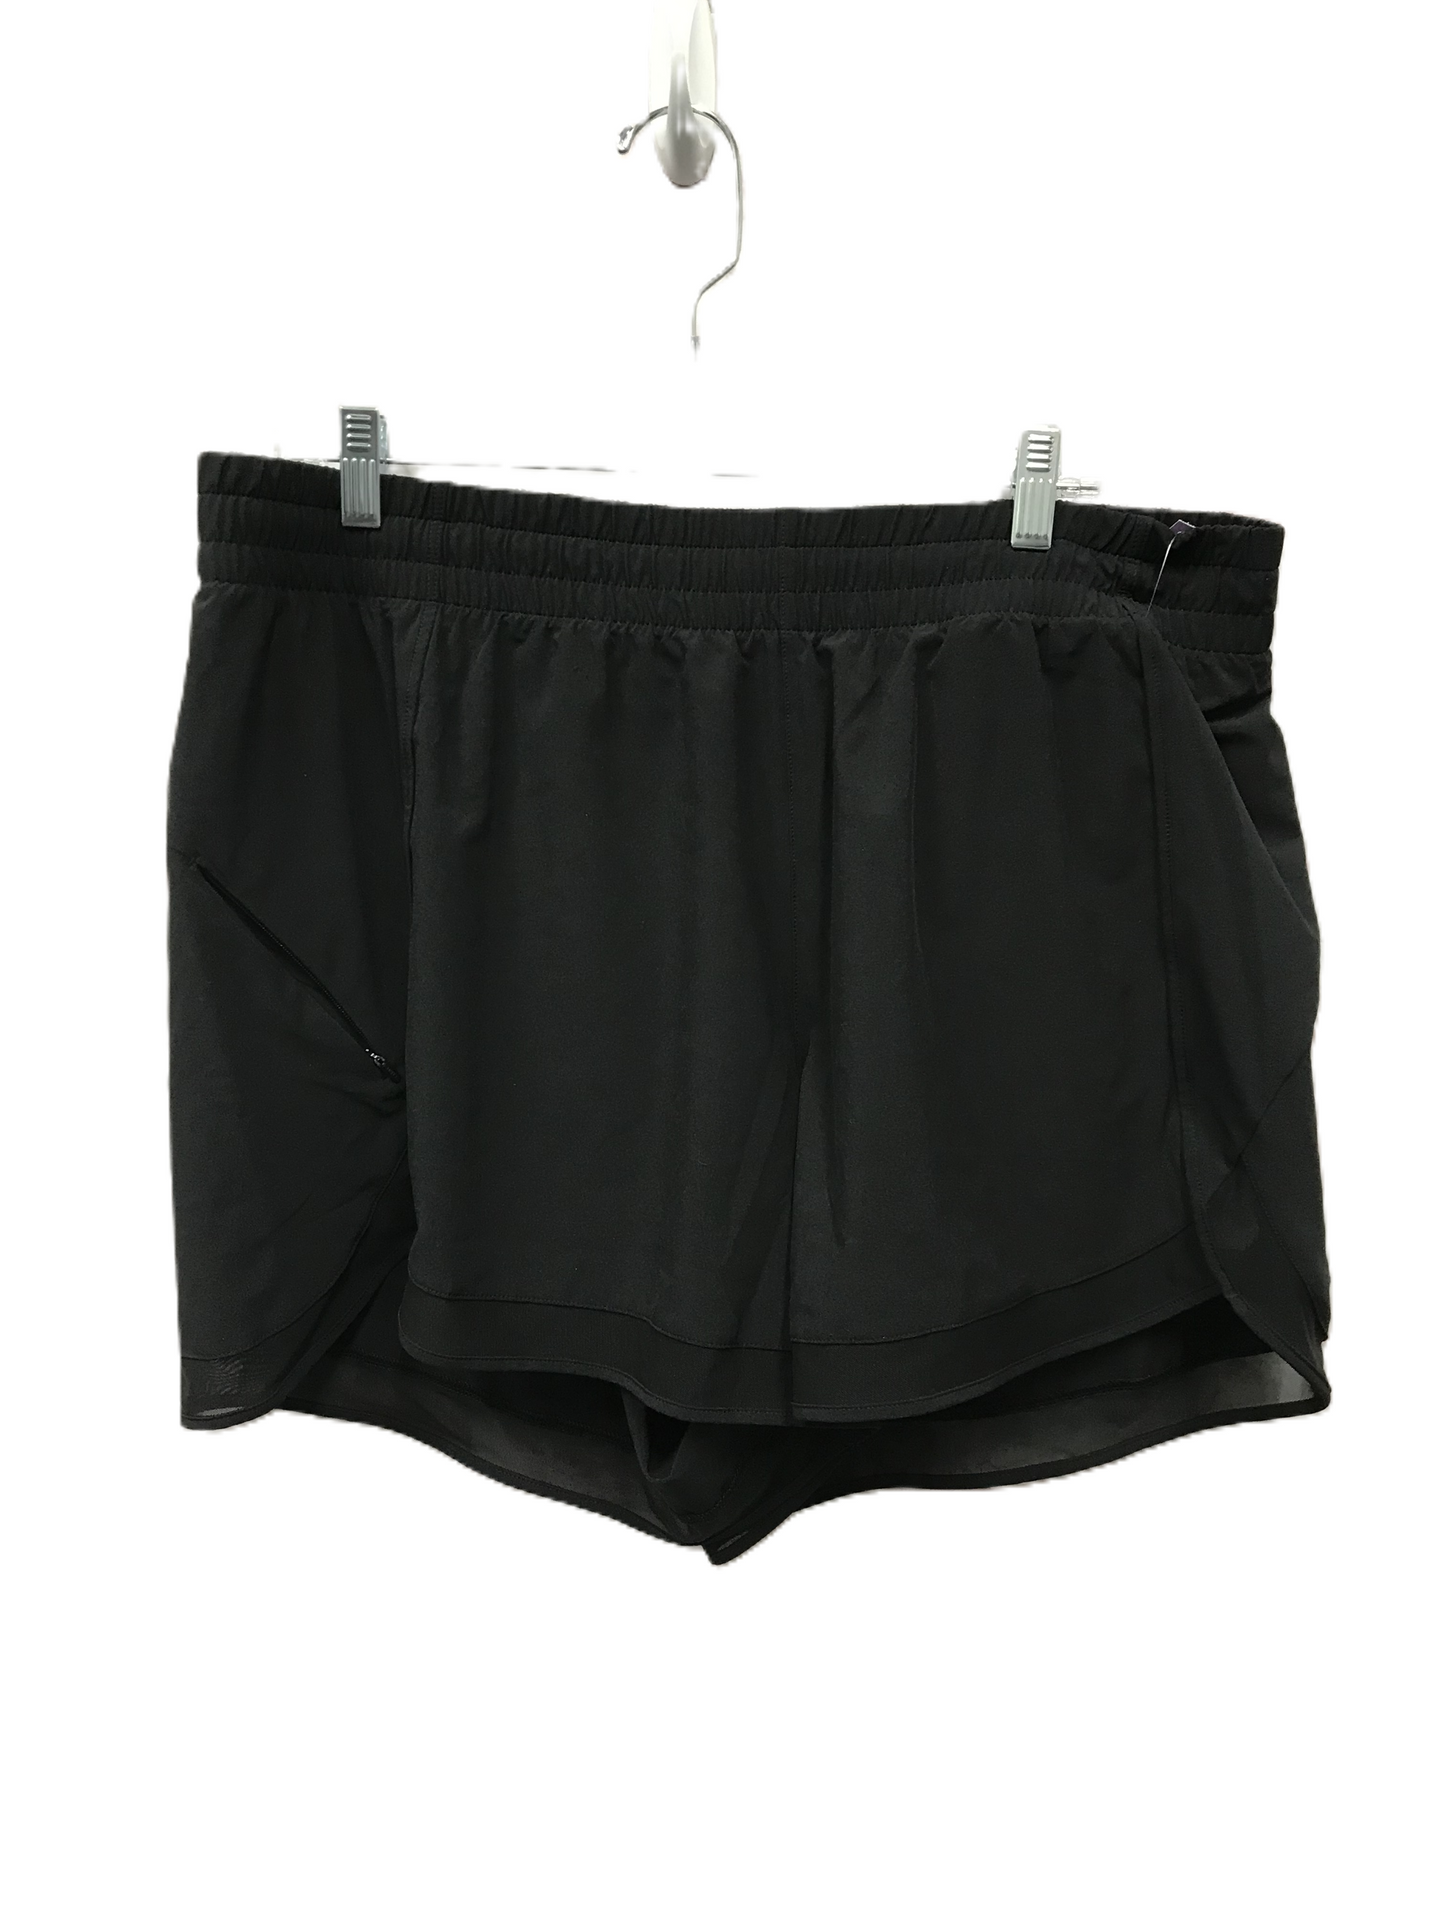 Athletic Shorts By Athleta  Size: 1x